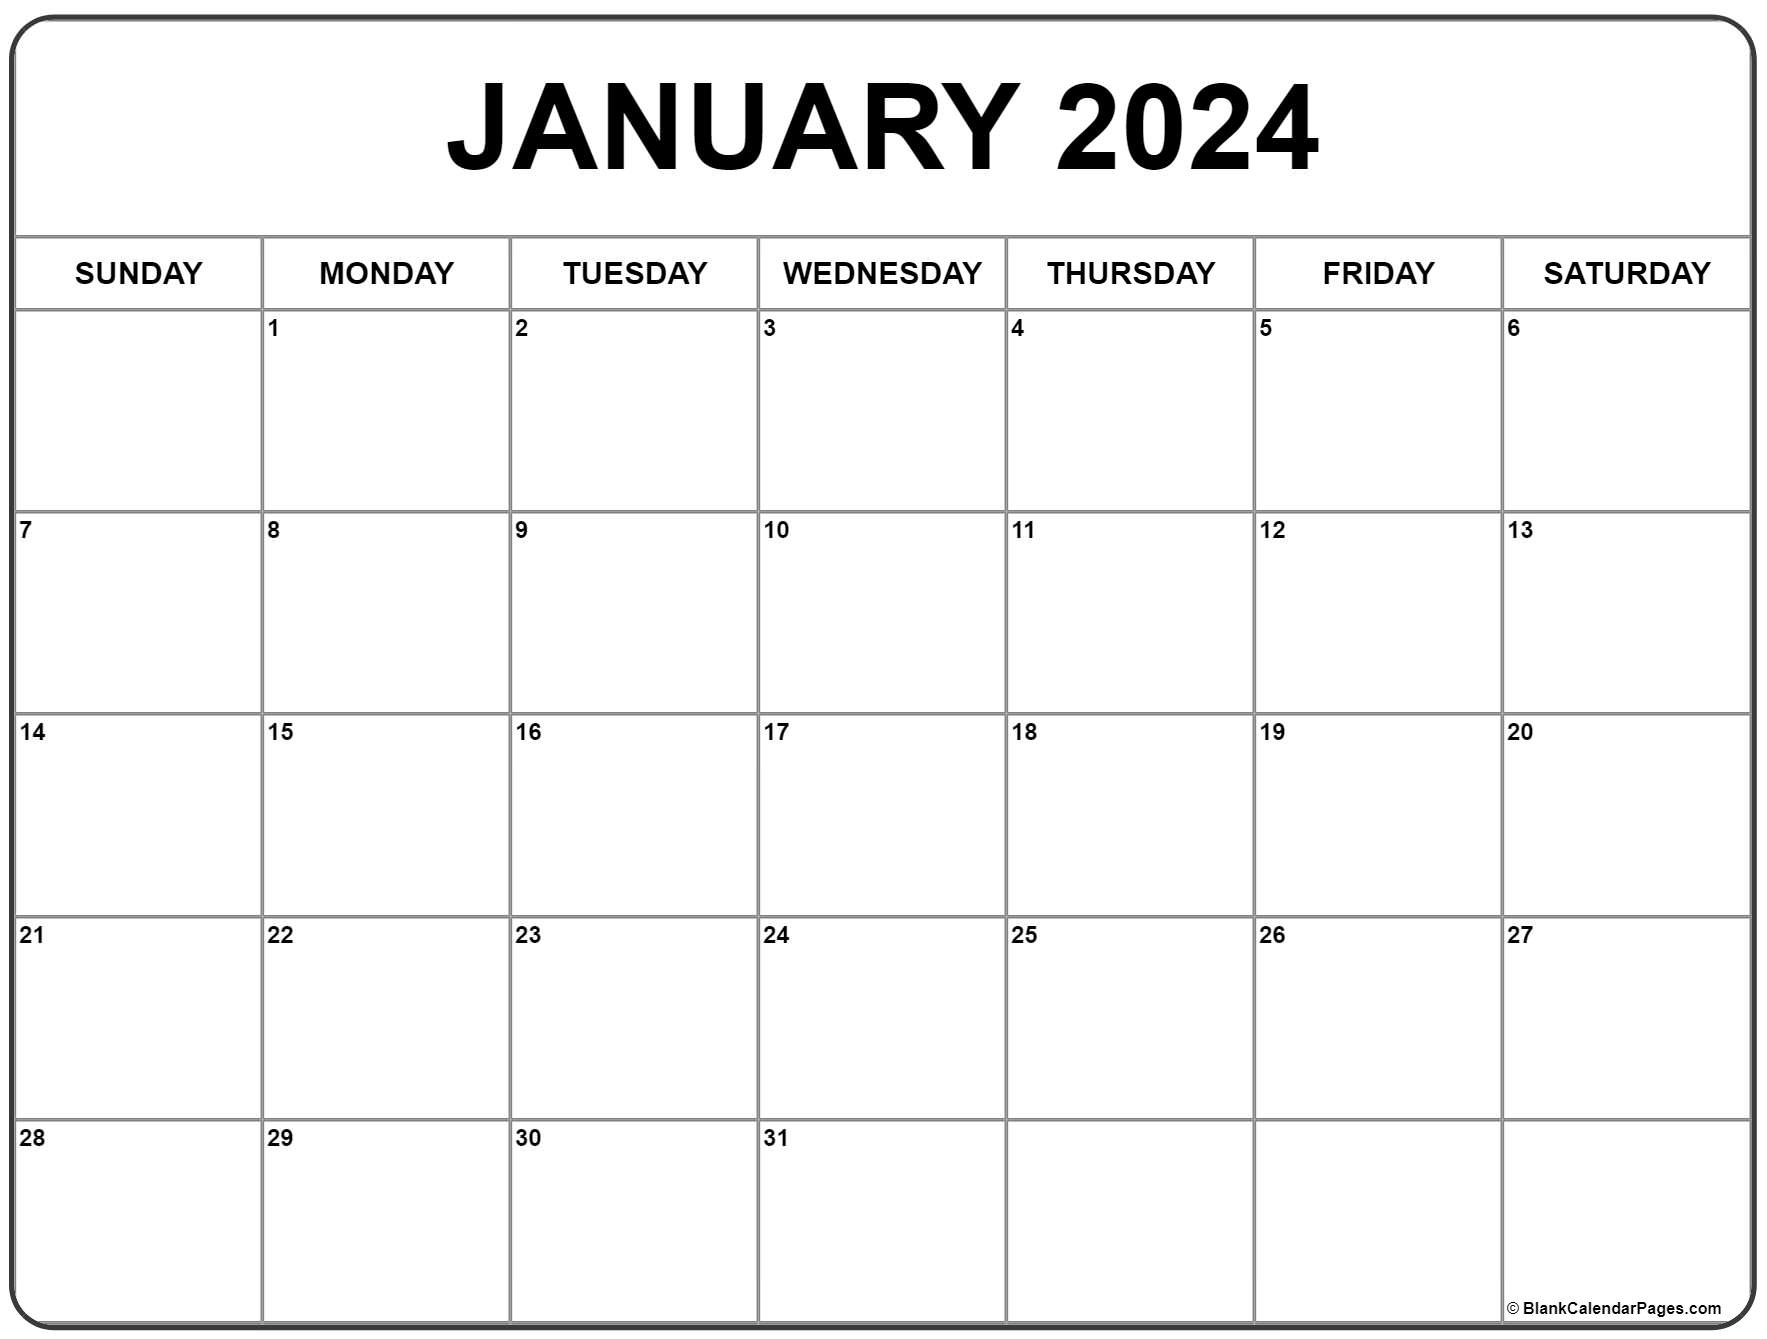 January 2024 Calendar | Free Printable Calendar for Free-Printable-Calendar 2024